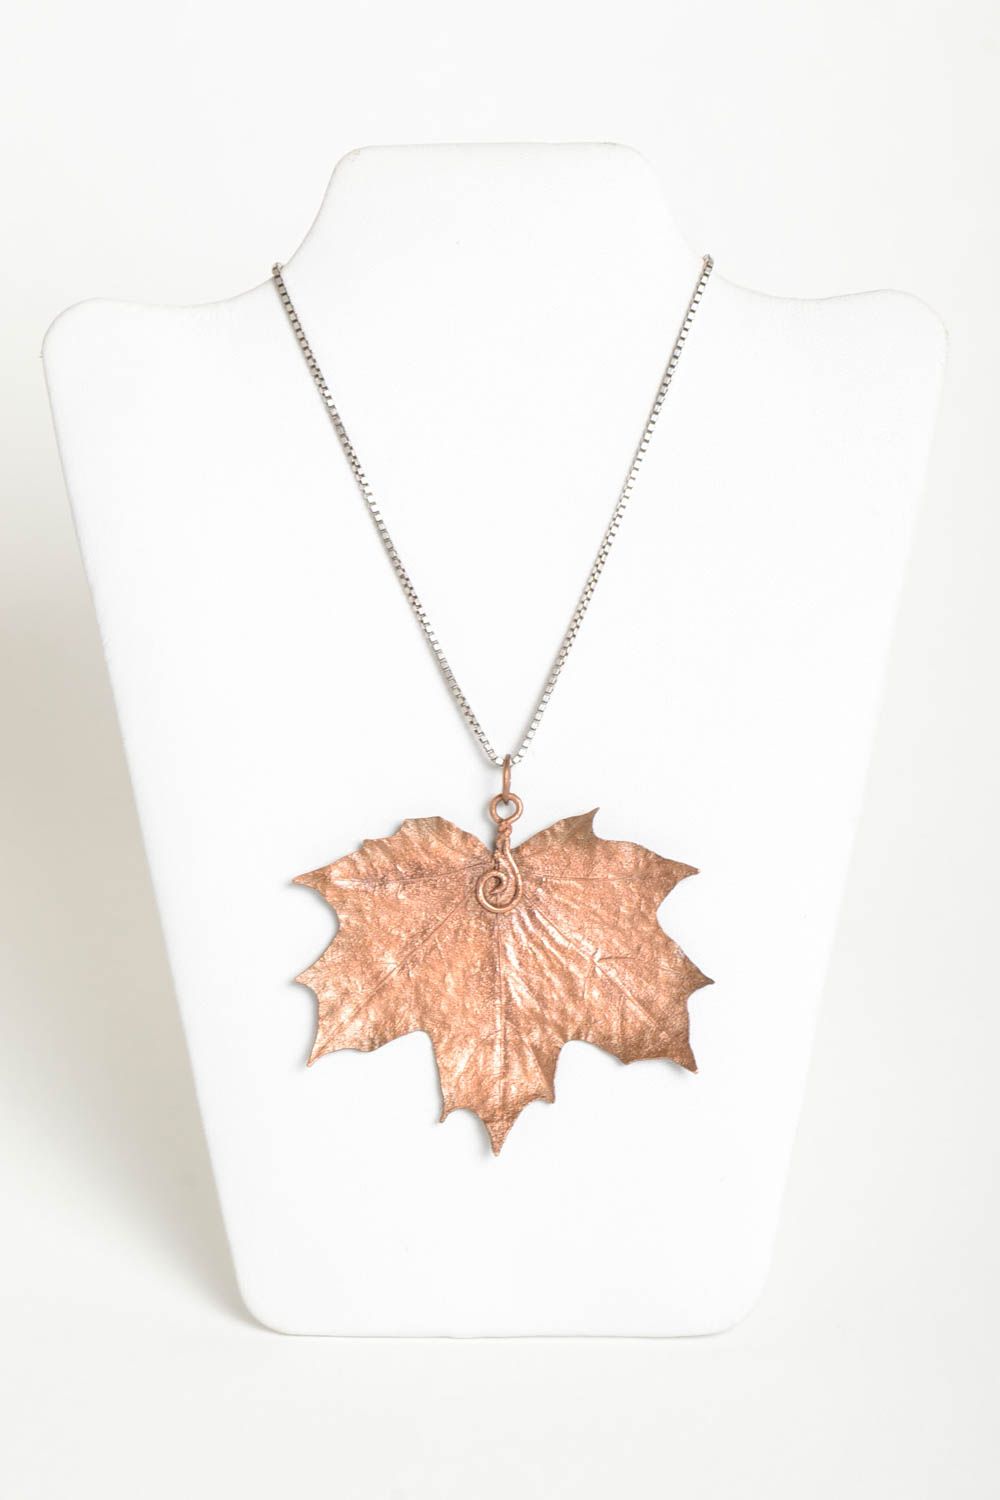 Stylish handmade copper pendant metal jewelry designs neck pendant design photo 2